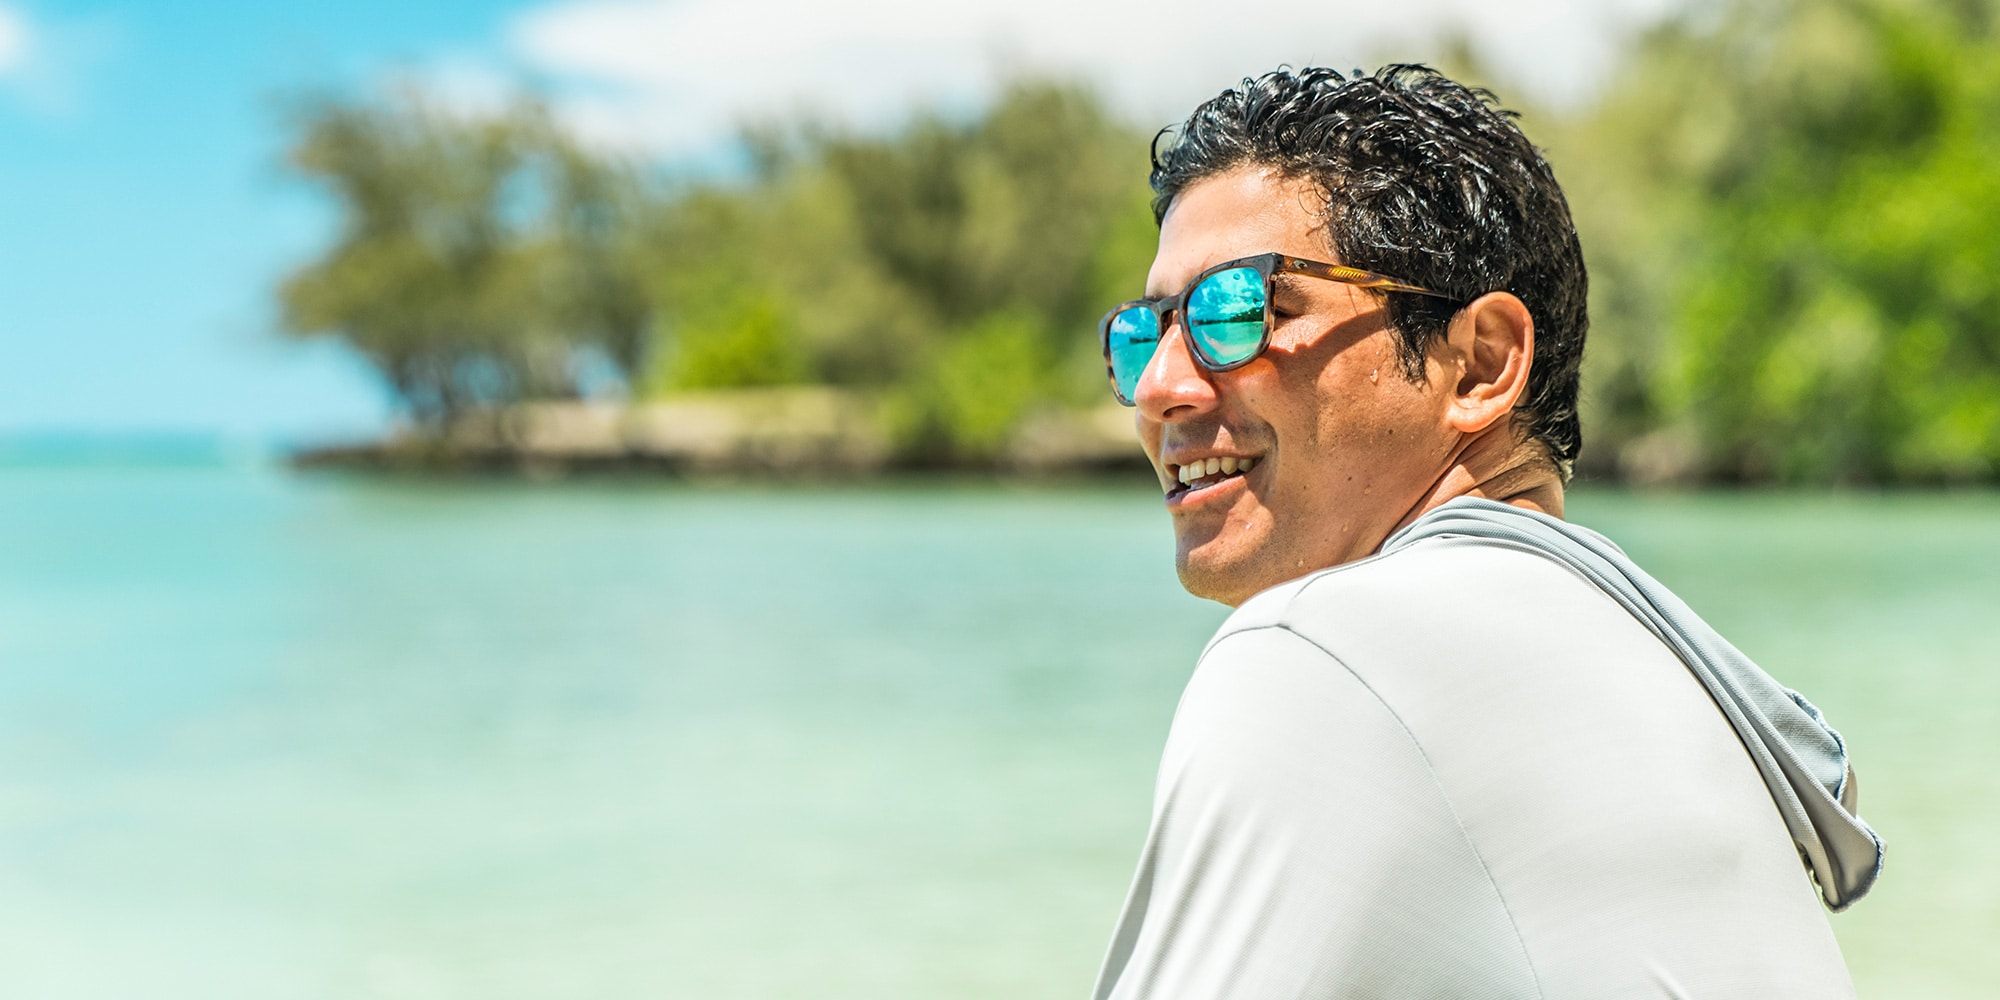 https://media.costadelmar.com/images/lifestyle/sullivan/costa-del-mar-sullivan-polarized-sunglasses-on-man.jpg